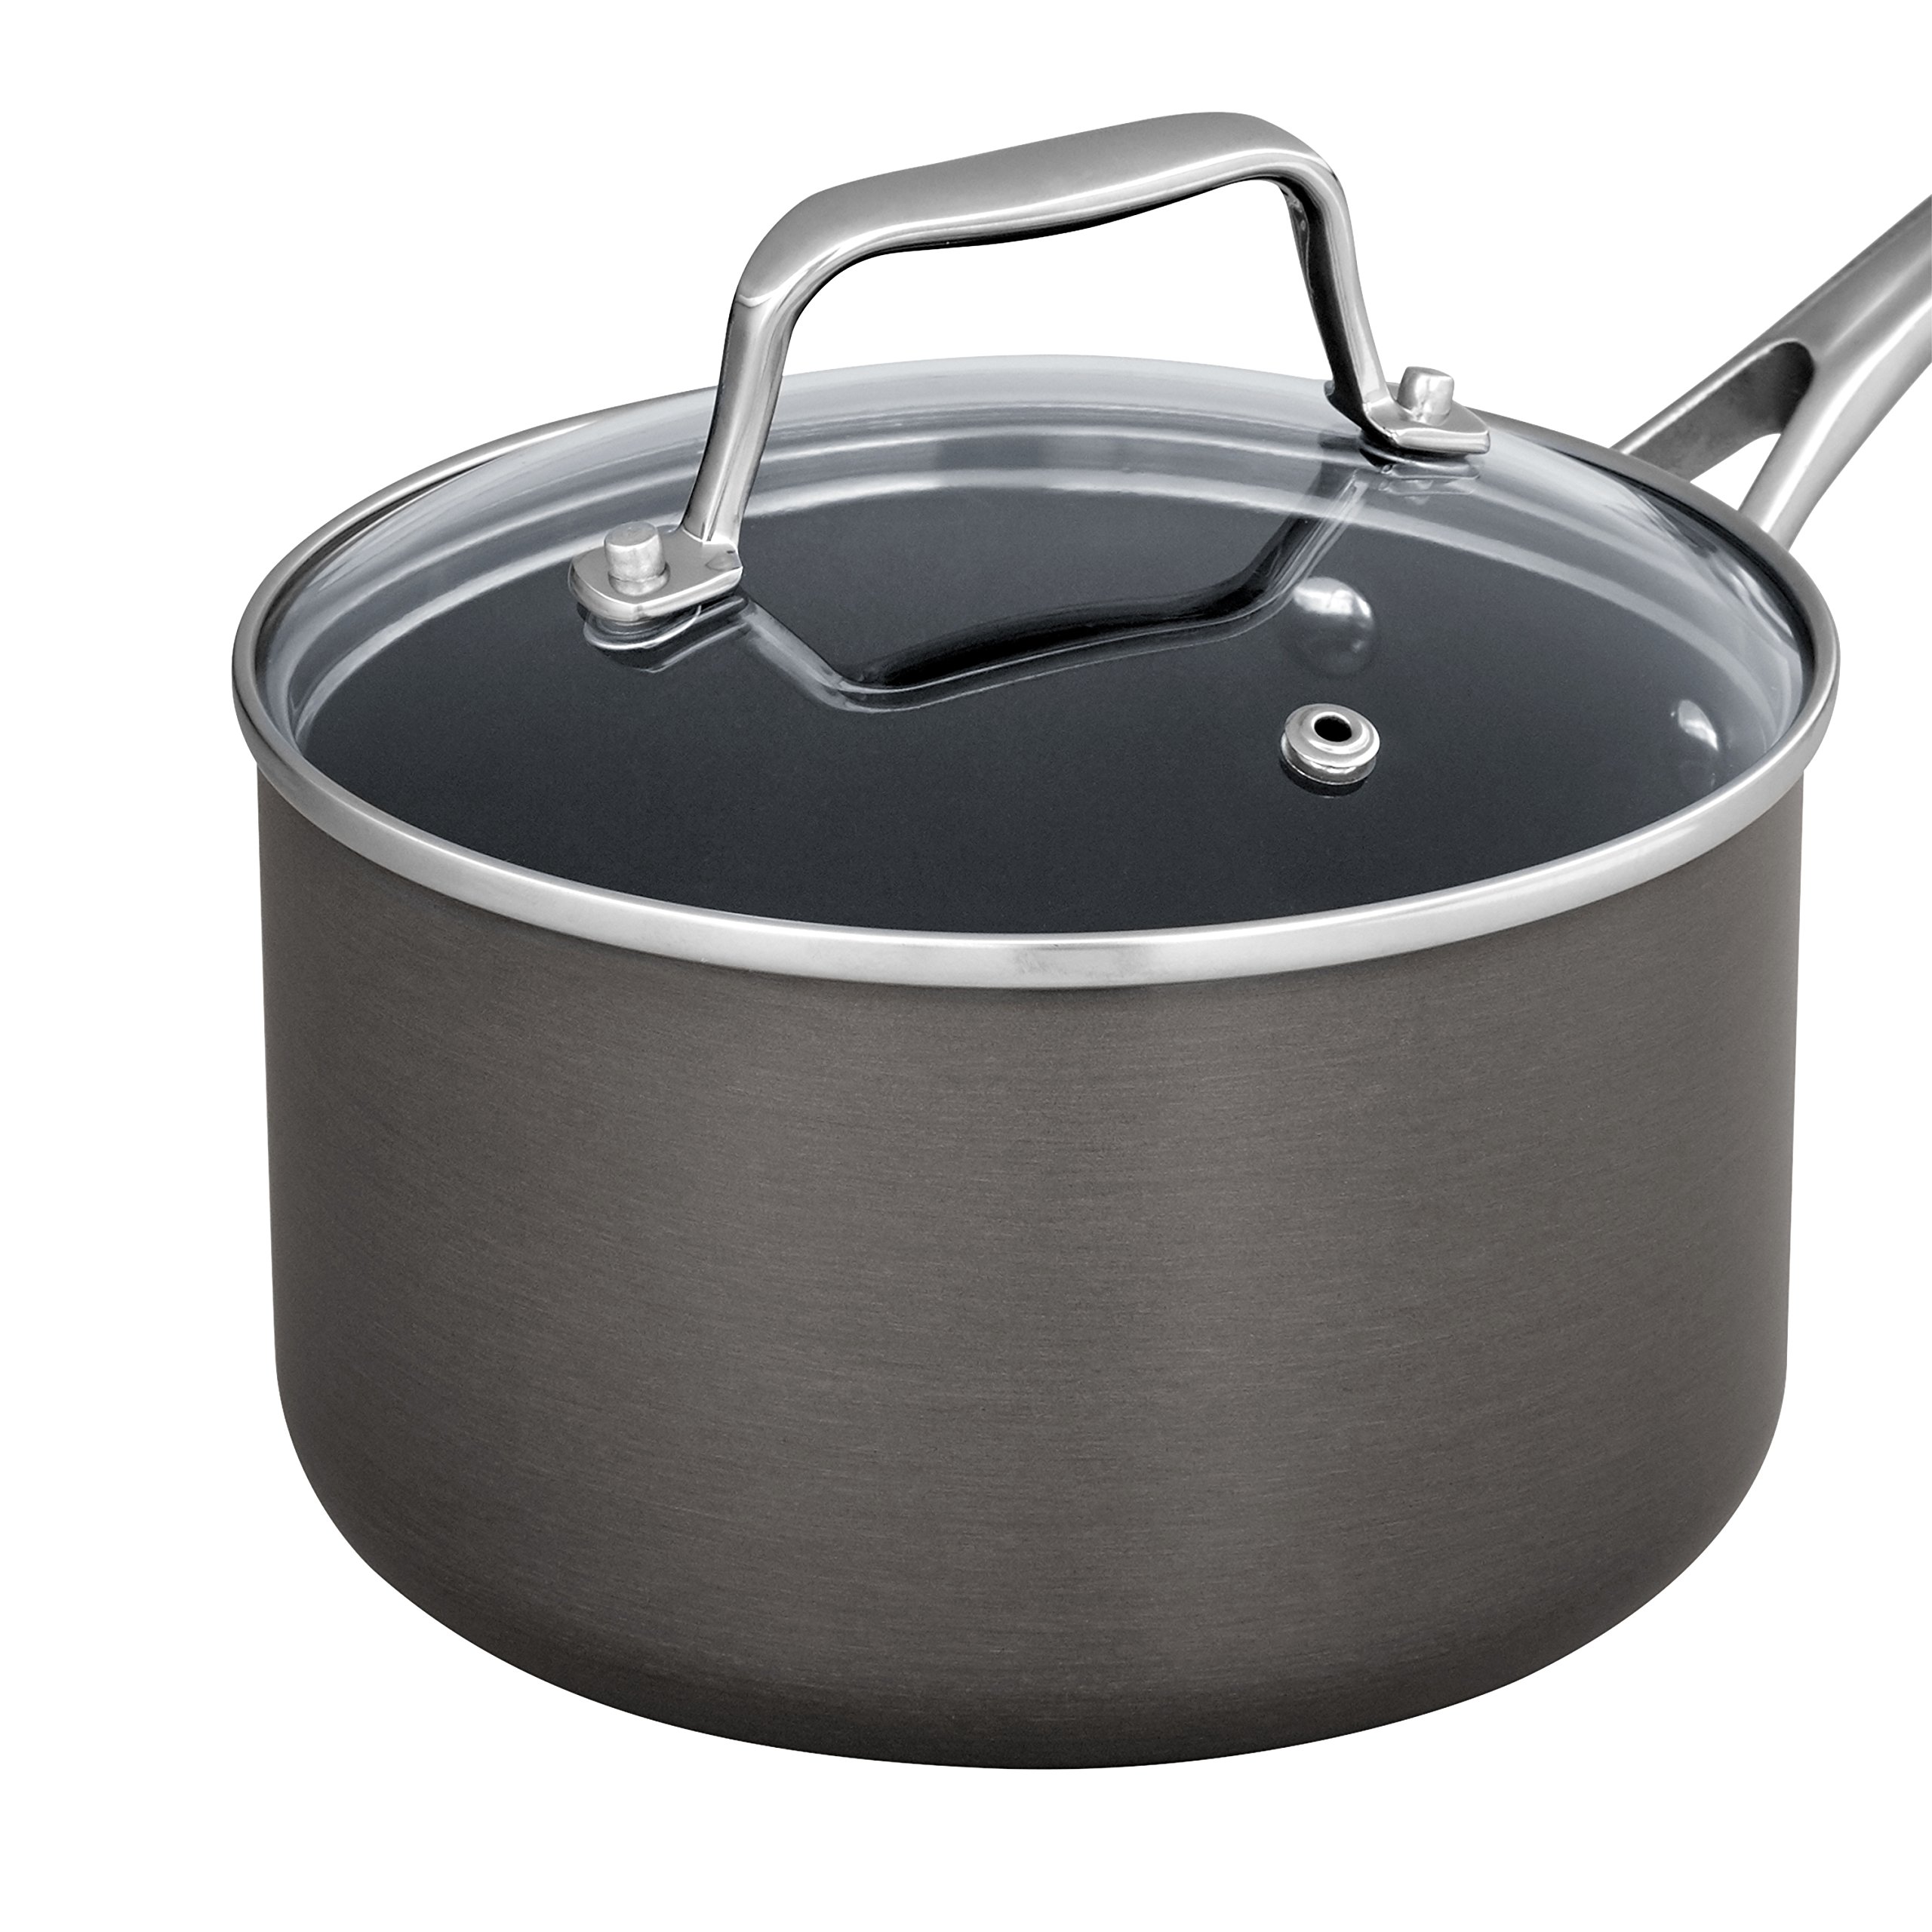 Amazon Brand - Stone & Beam Sauce Pan With Lid, 2-Quart, Hard-Anodized Non-Stick Aluminum, Gray